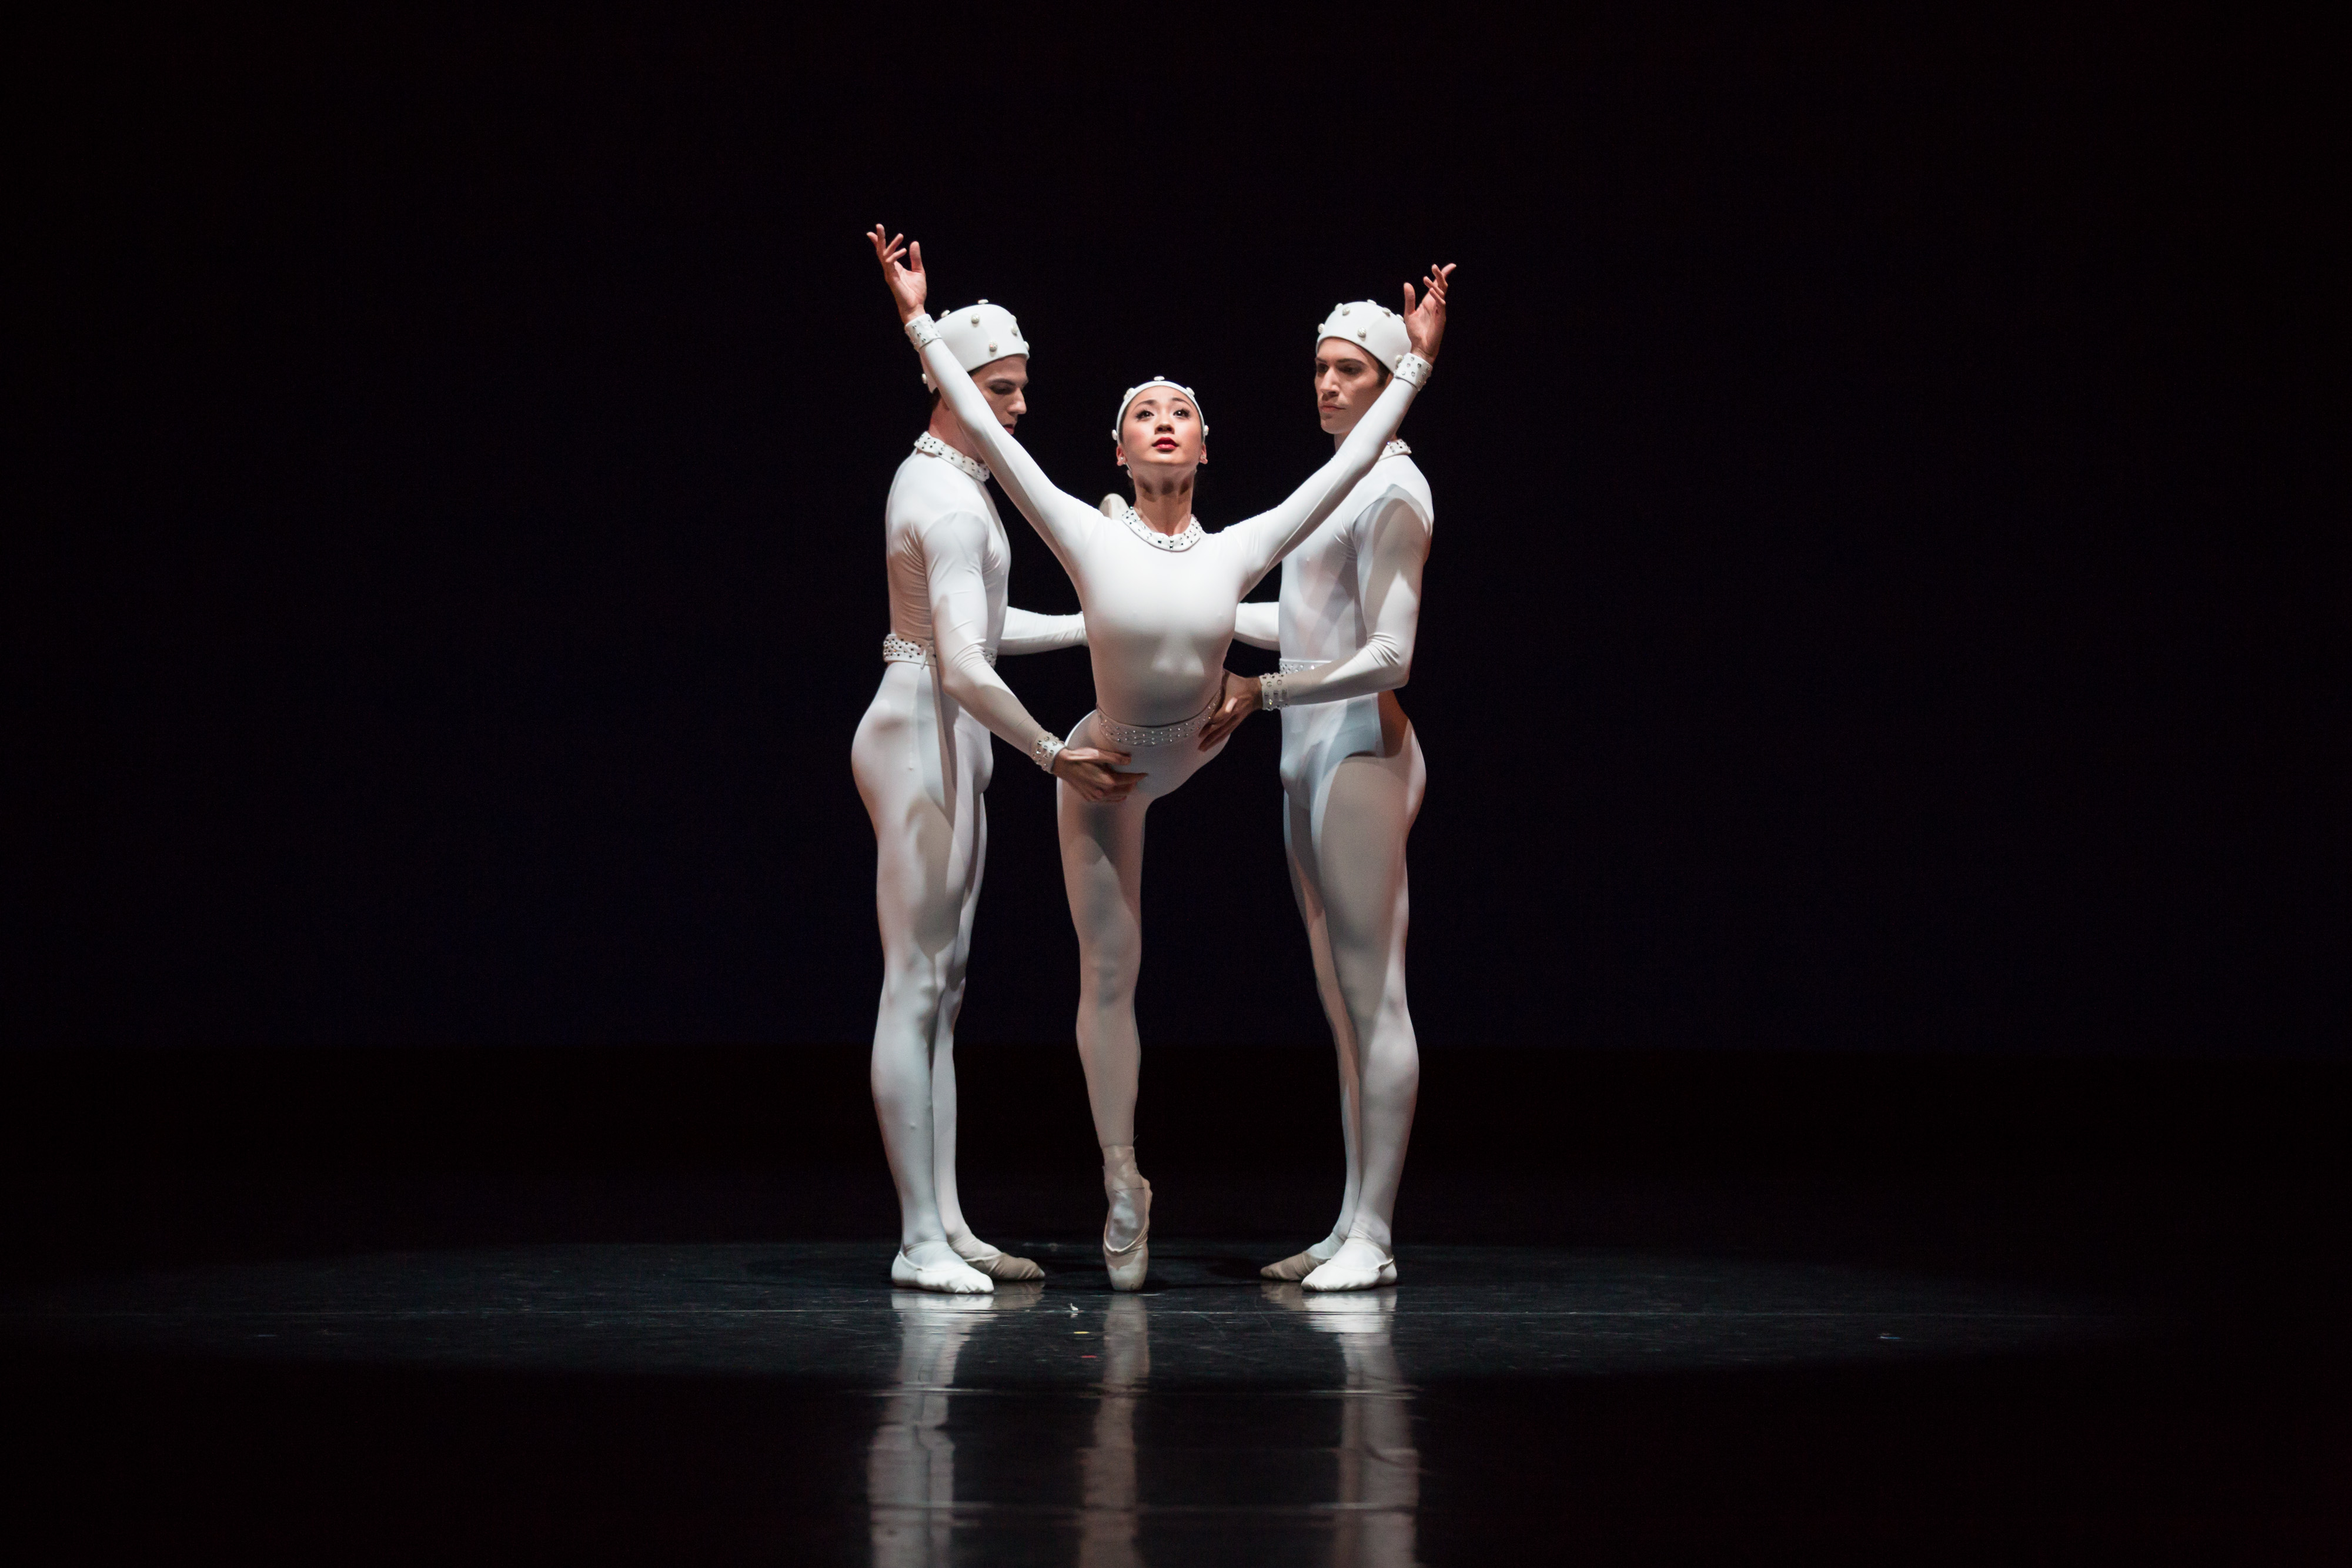 Jared Wright, Natasha Kusen and Brett Simon in 'Monotones II'. The Australian Ballet, 2015. Daniel Boud